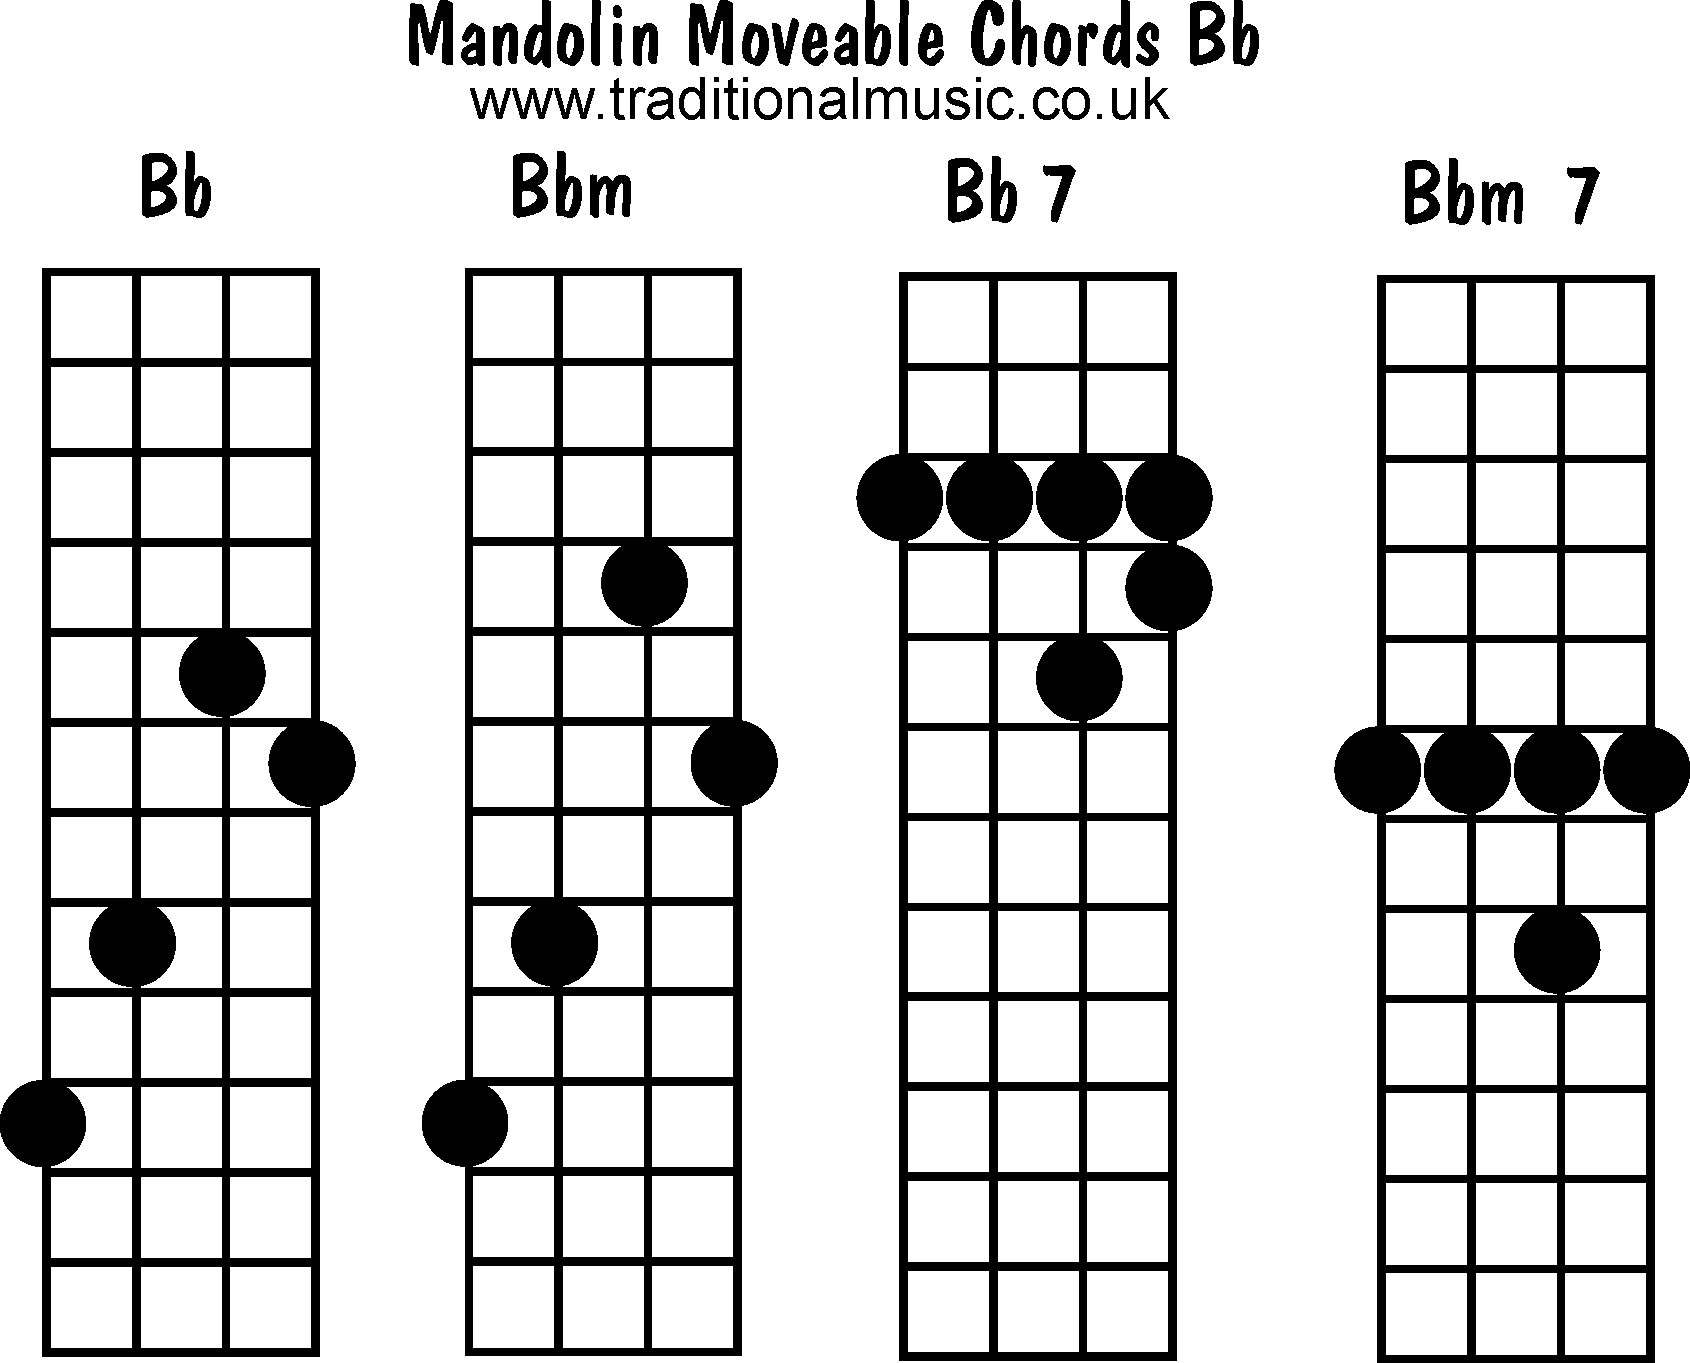 Moveable mandolin chords: Bb, Bbm, Bb7, Bbm7